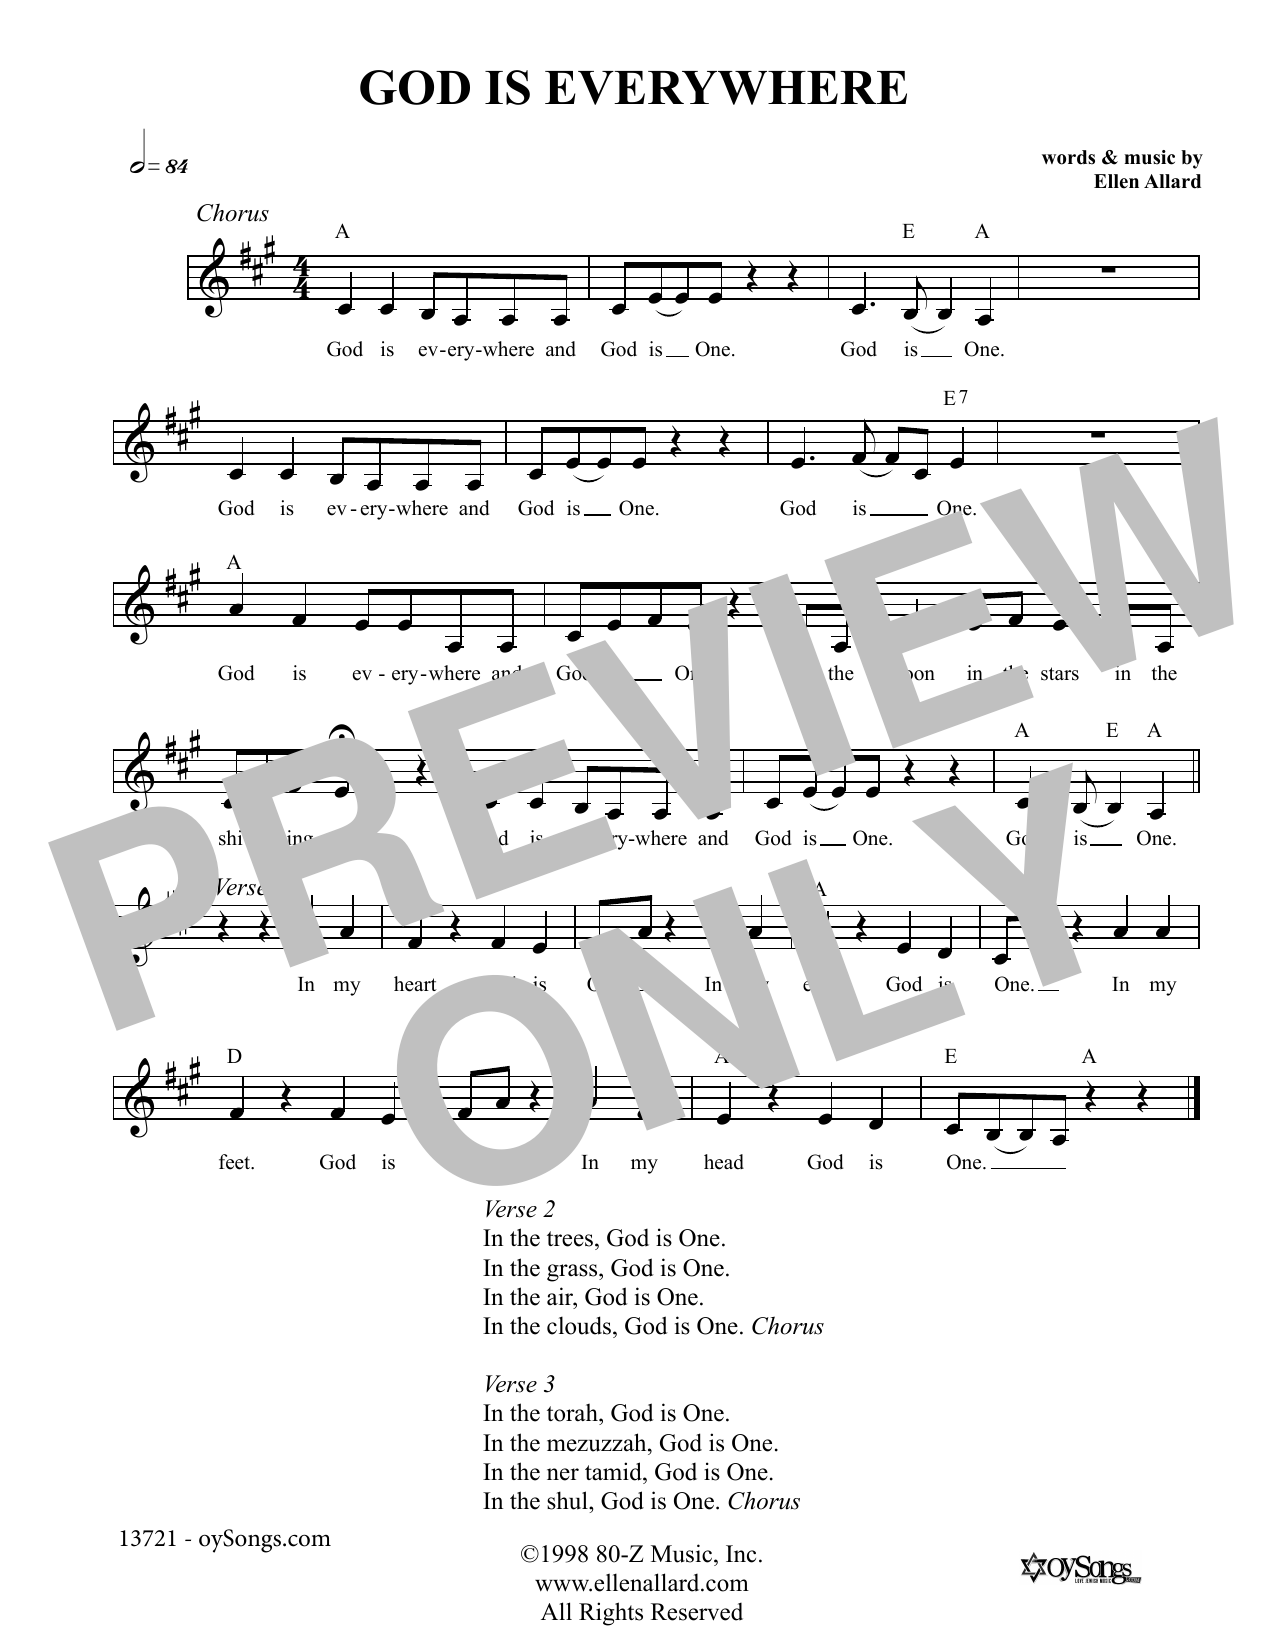 Ellen Allard God is Everywhere Sheet Music Notes & Chords for Melody Line, Lyrics & Chords - Download or Print PDF